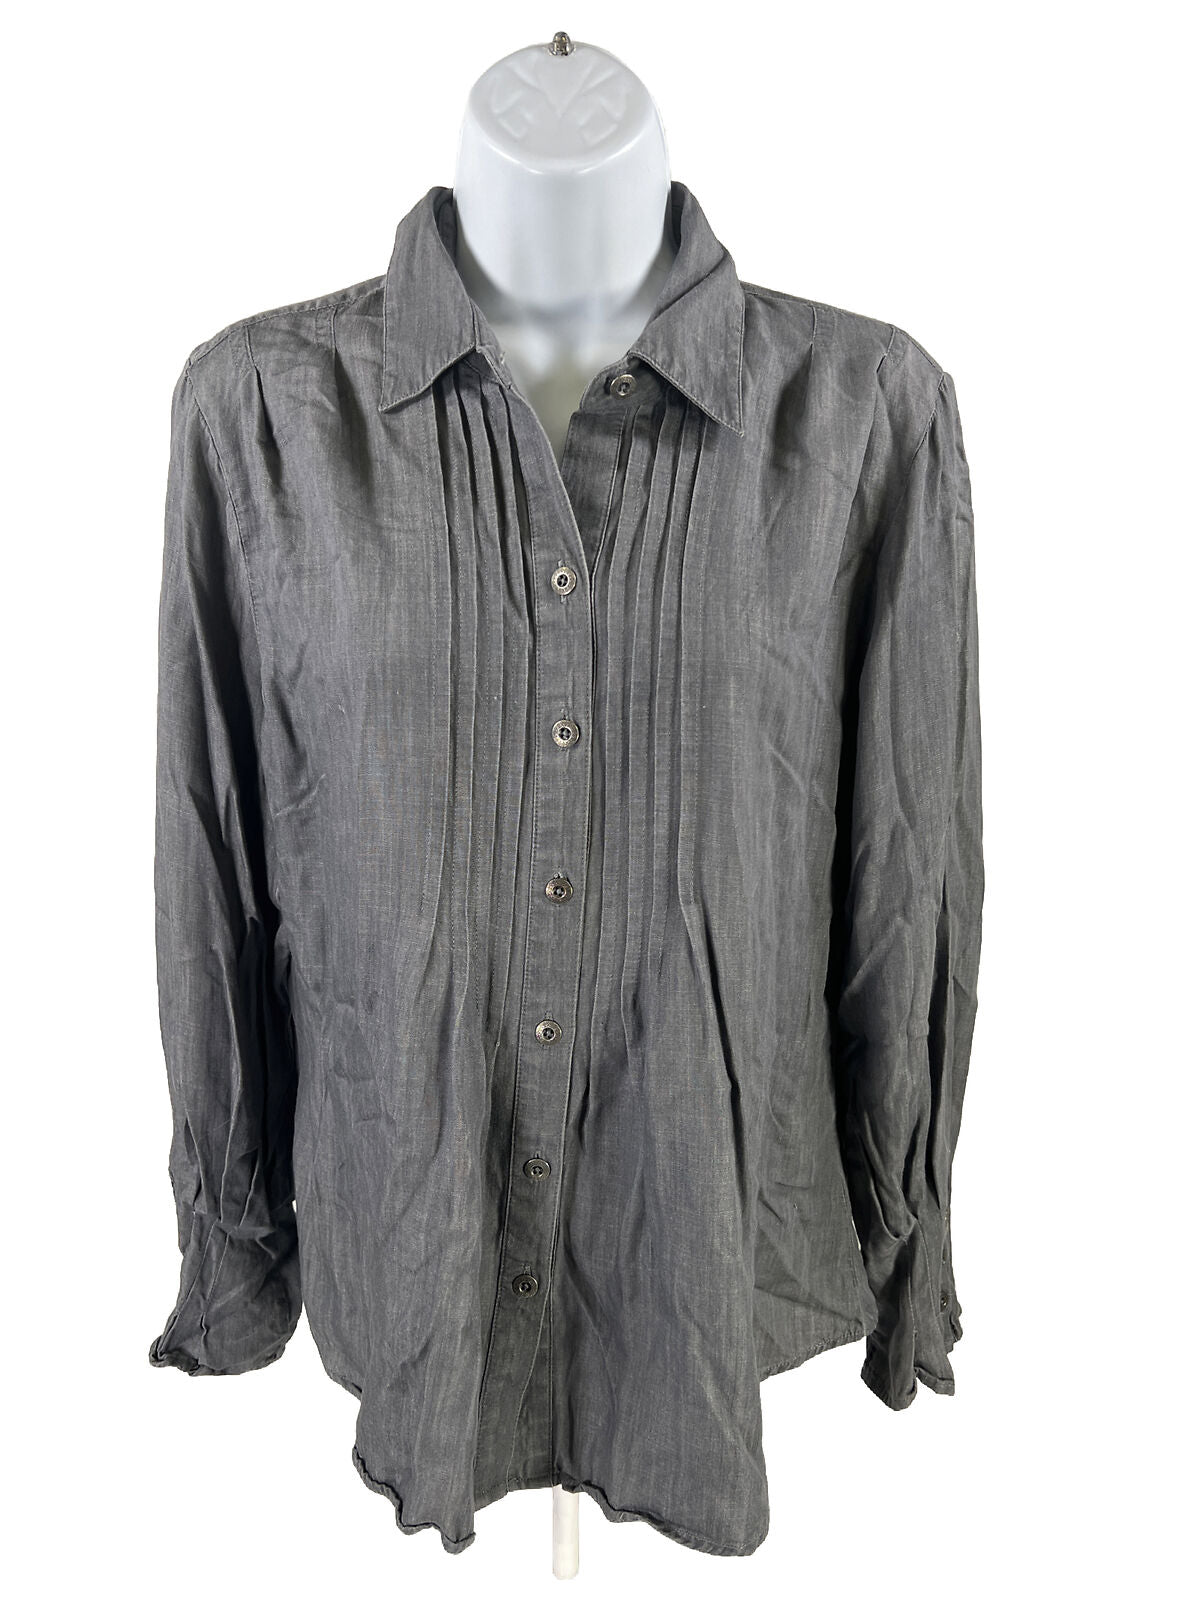 Coldwater Creek Camisa gris de manga larga con botones para mujer - Petite M